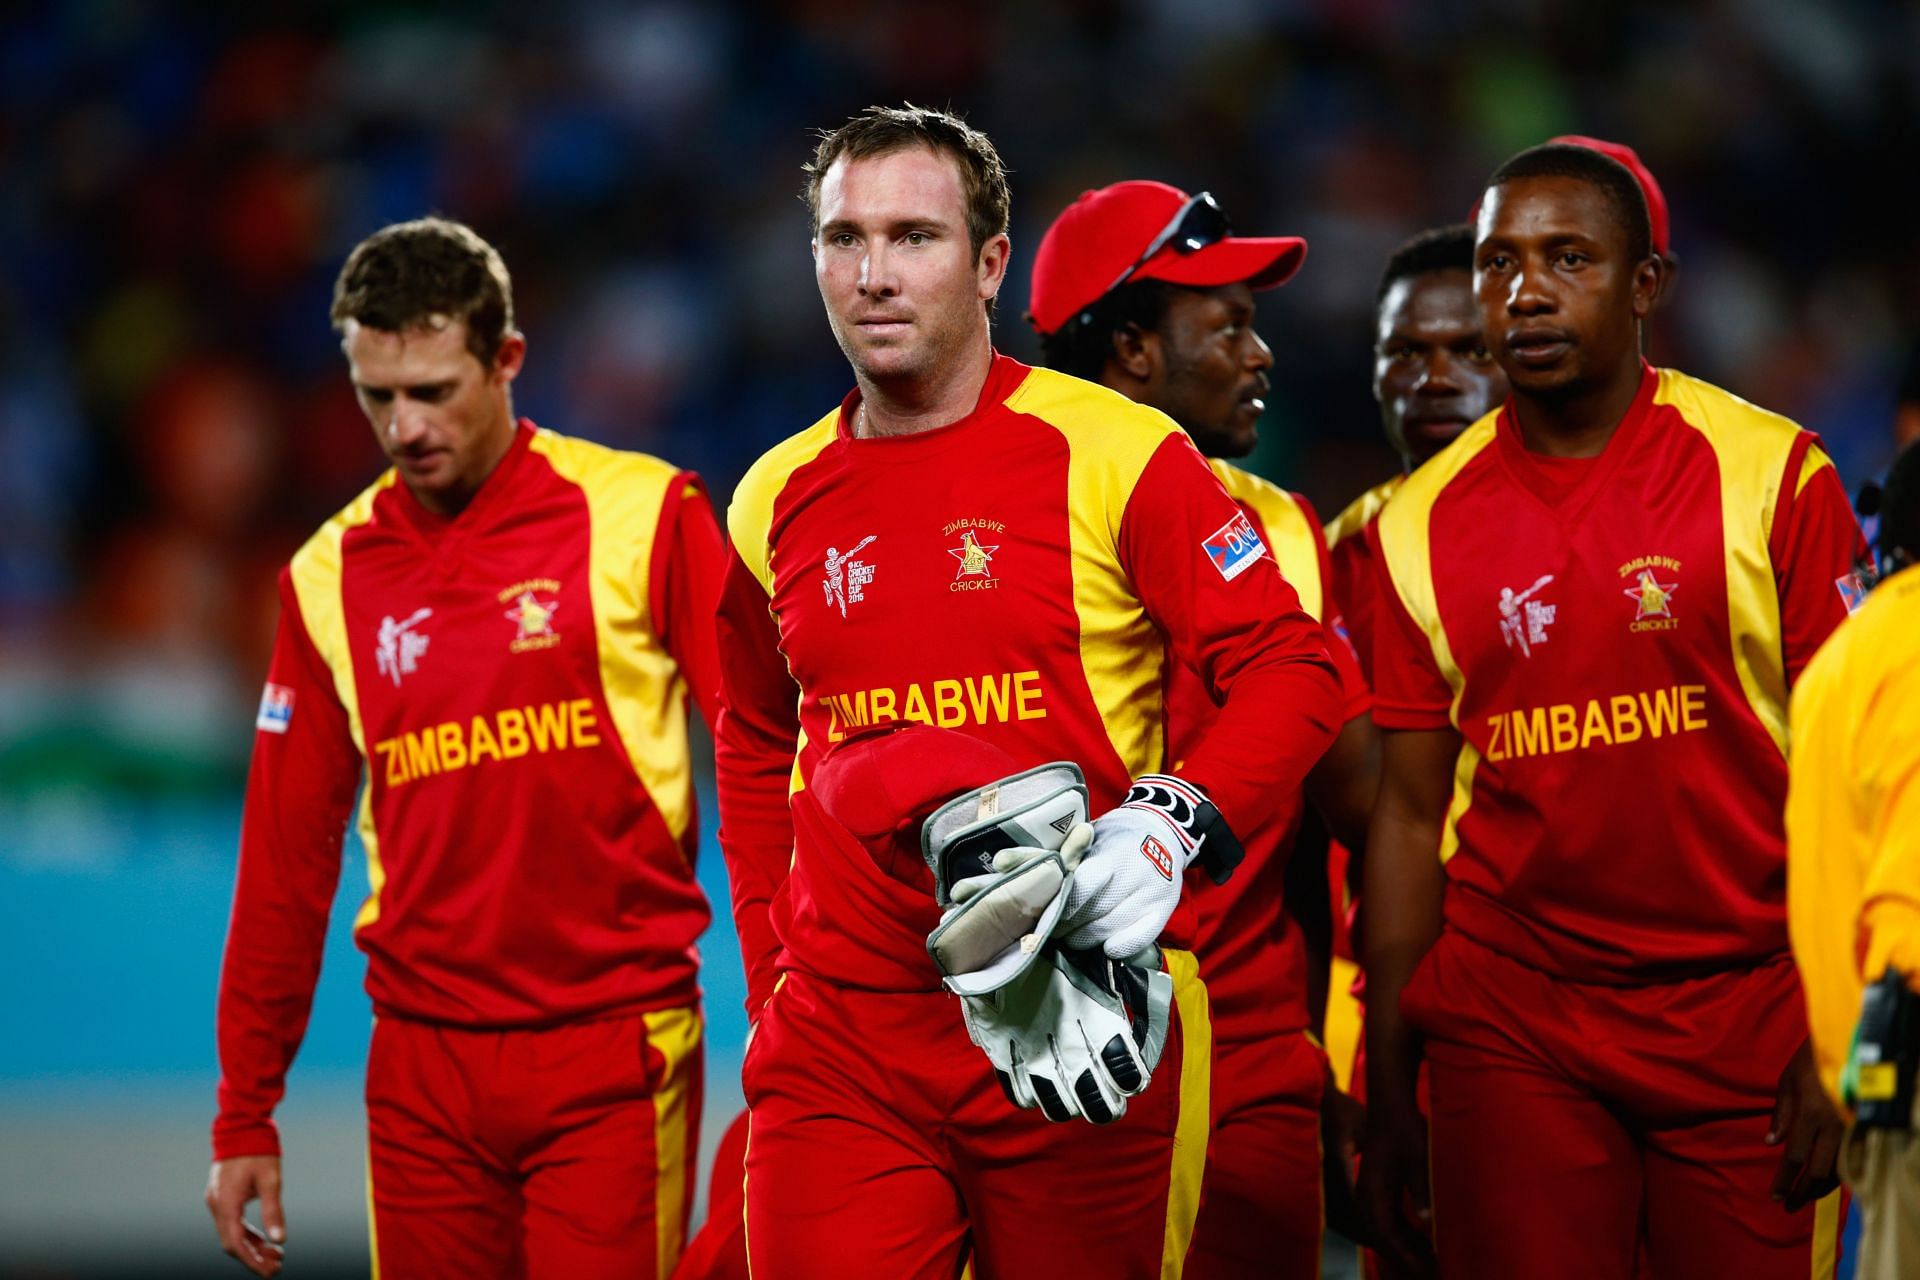 Zimbabwe will arrive in Sri Lanka on January 10 to face Sri Lanka